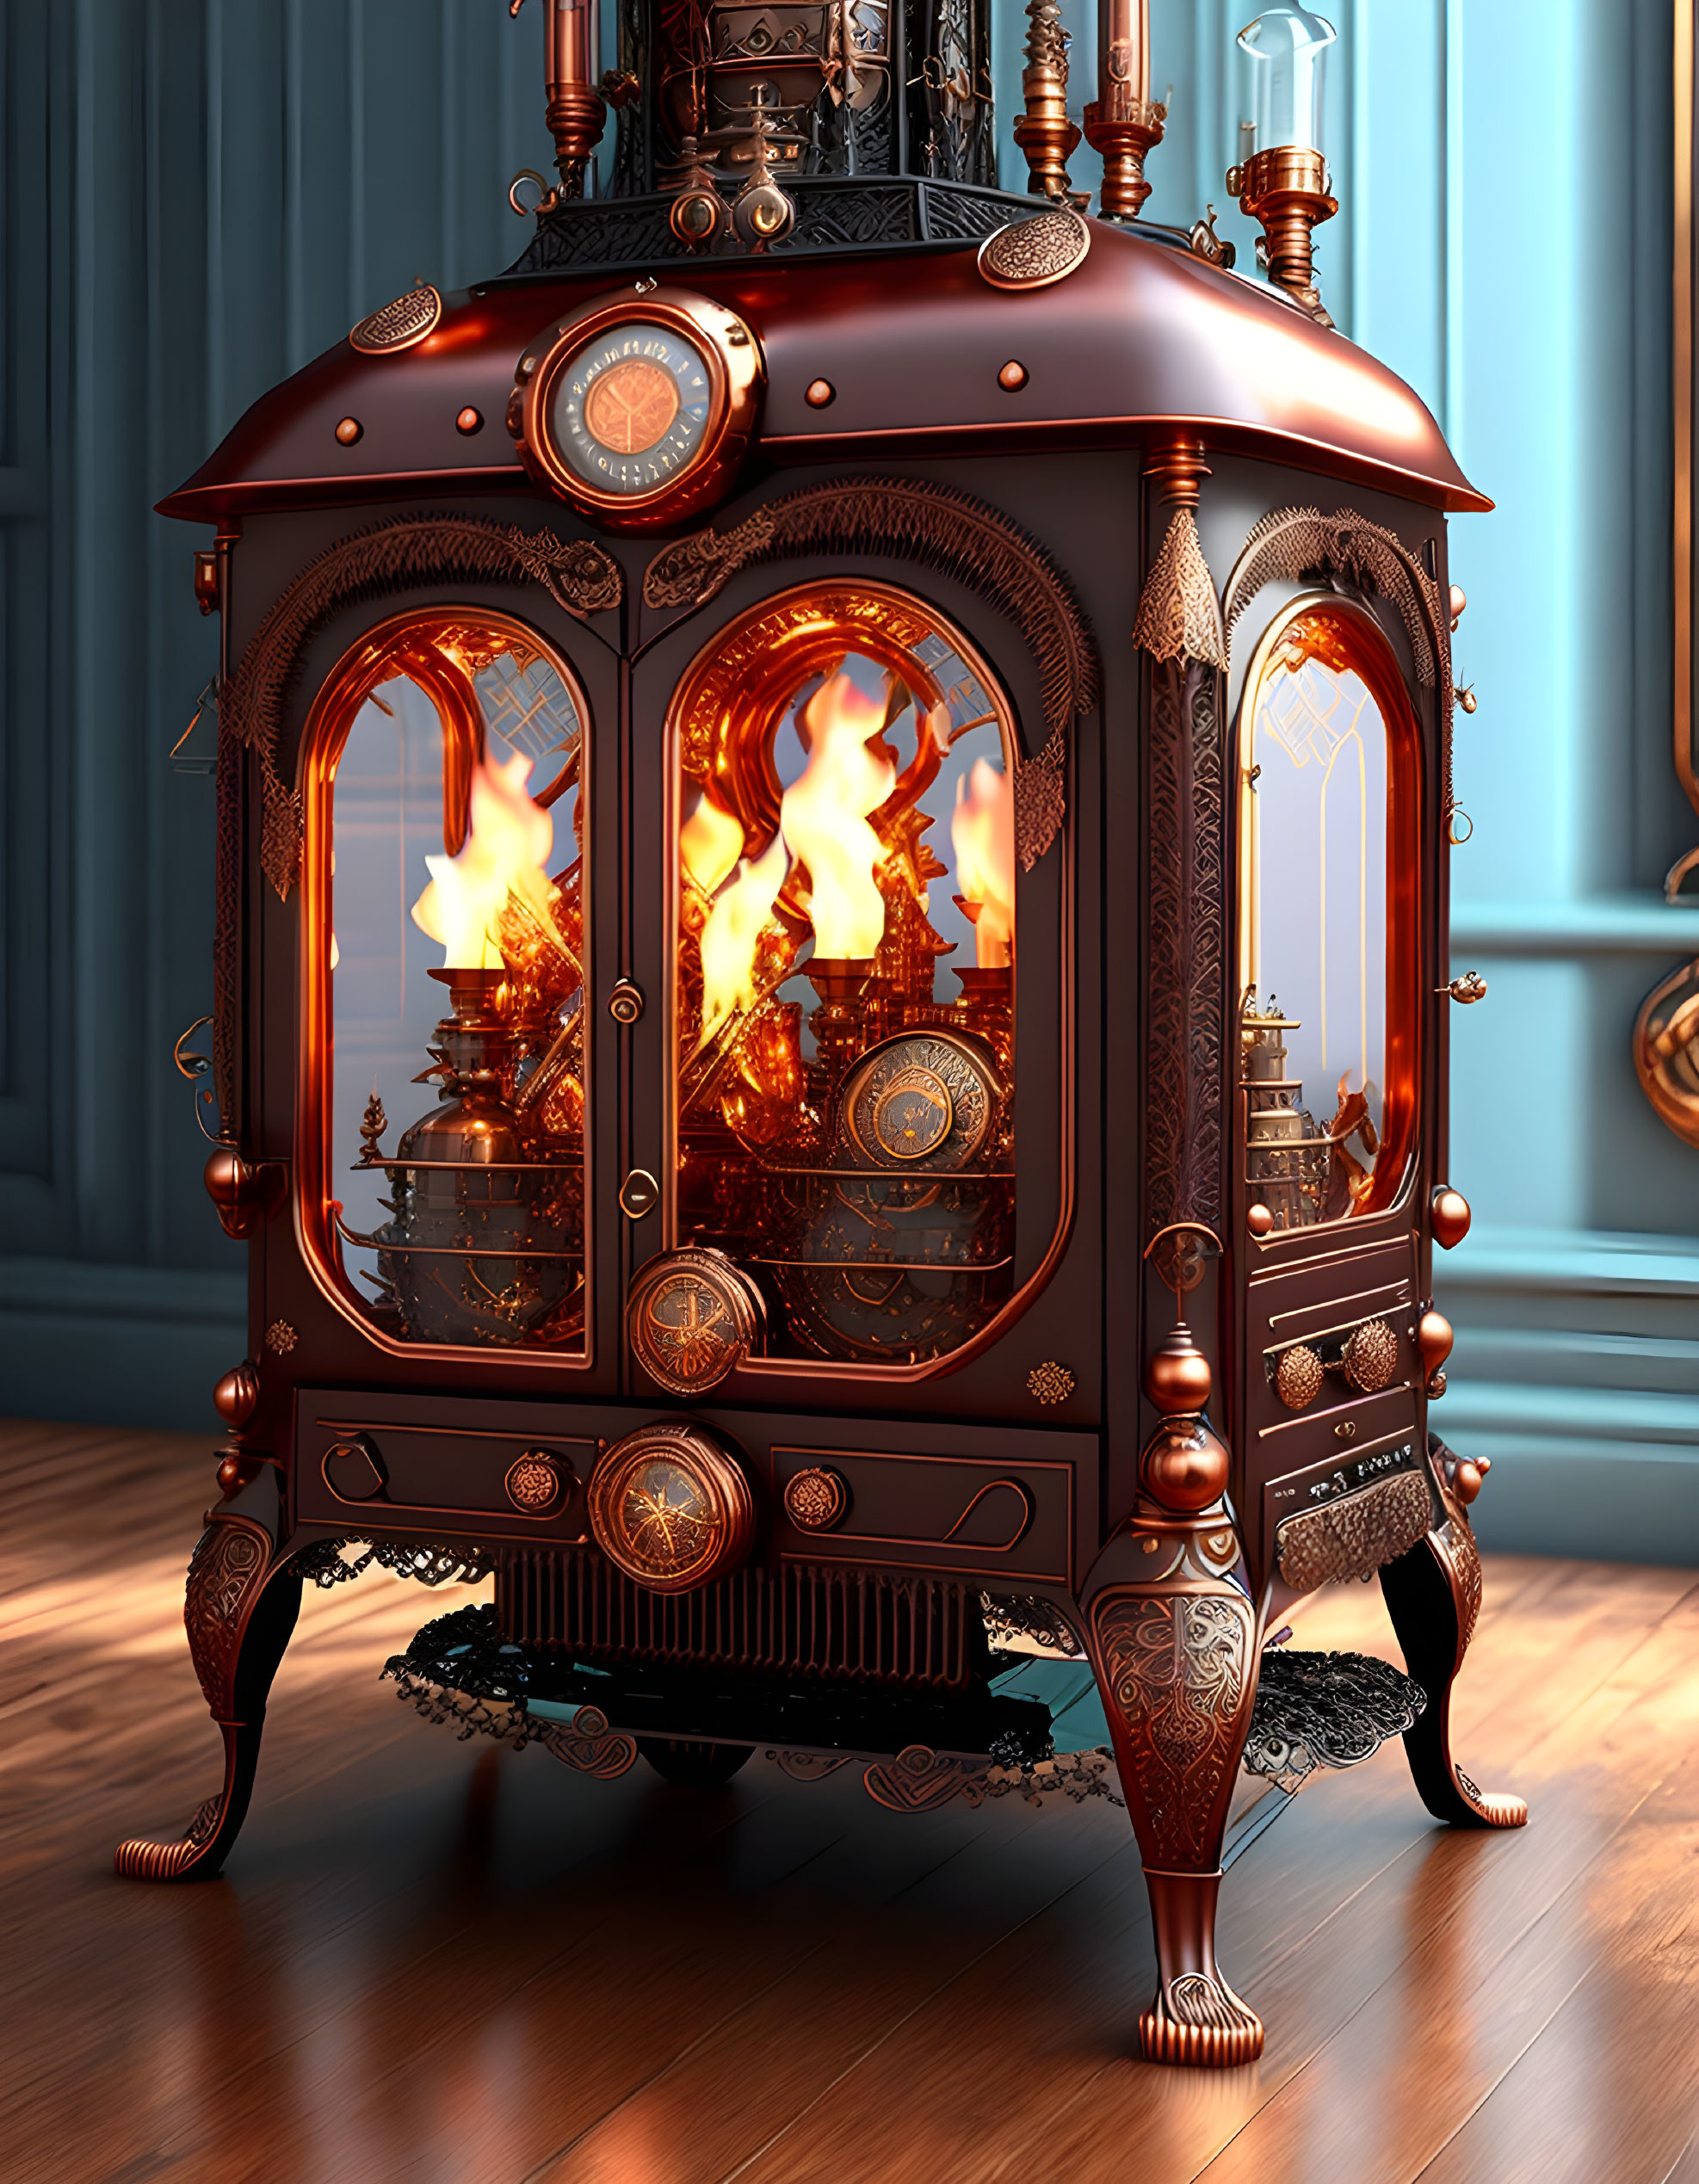 A beautiful Steampunk stove in a museum